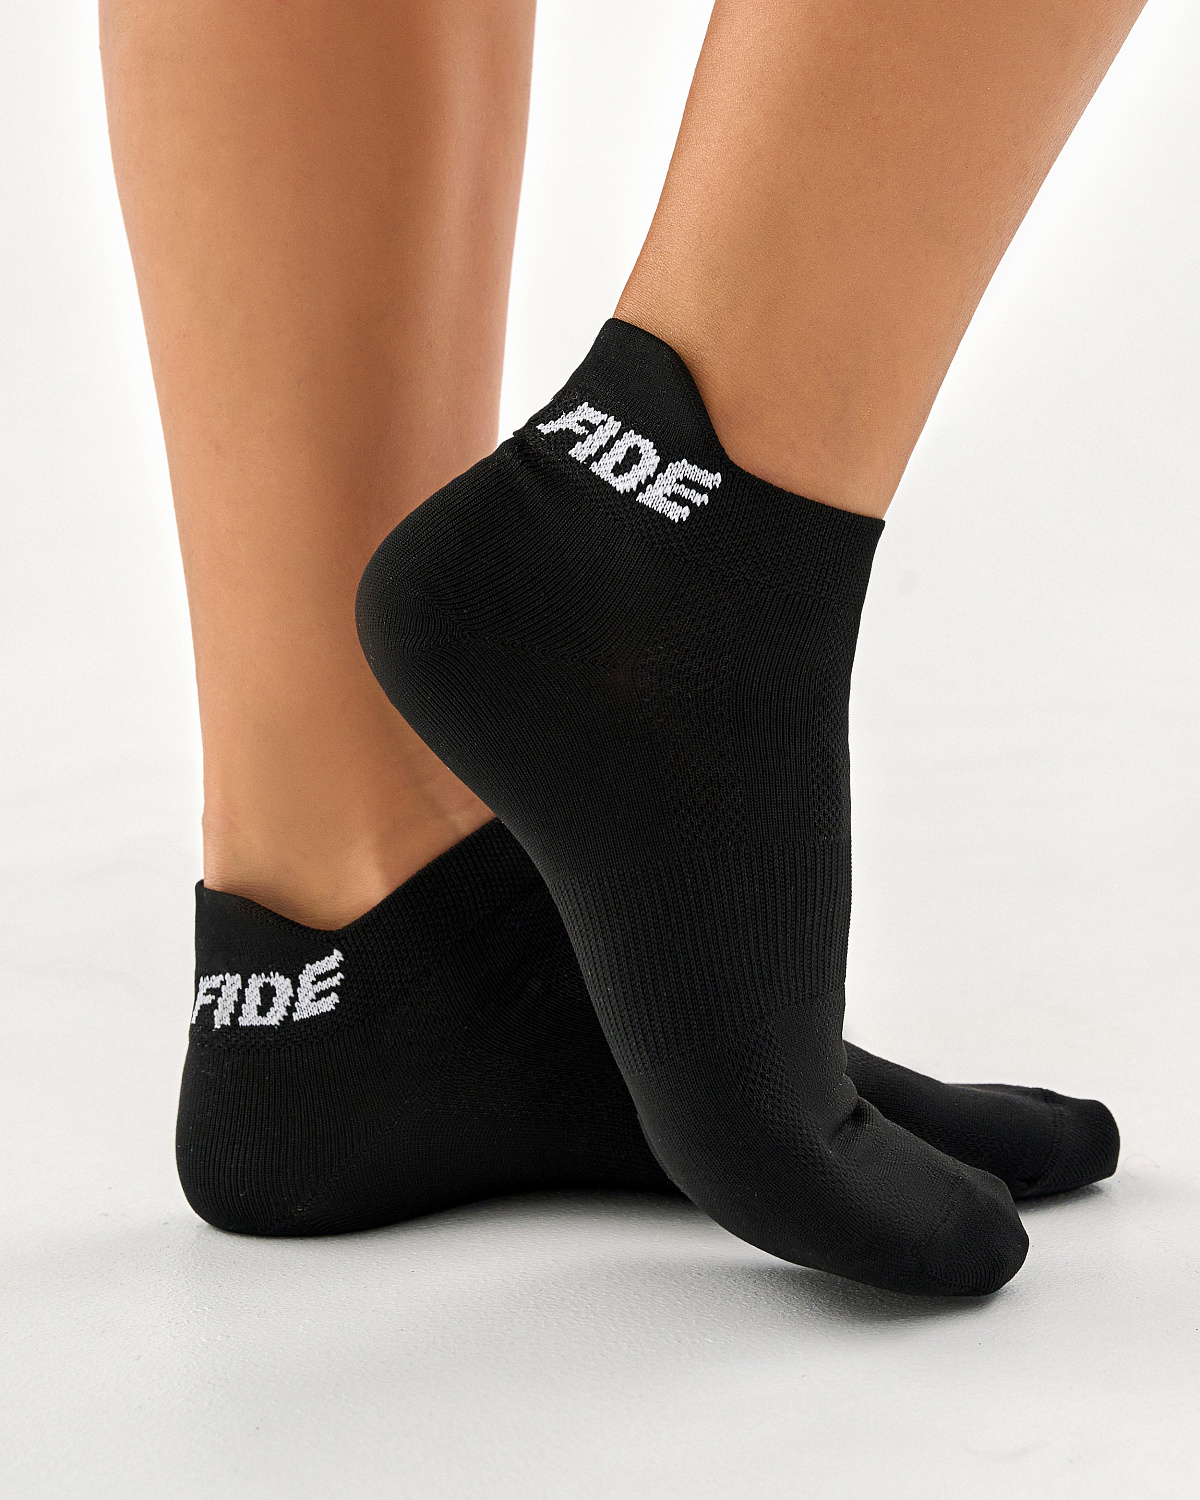 Bona Fide носки Socks "Black", Черный